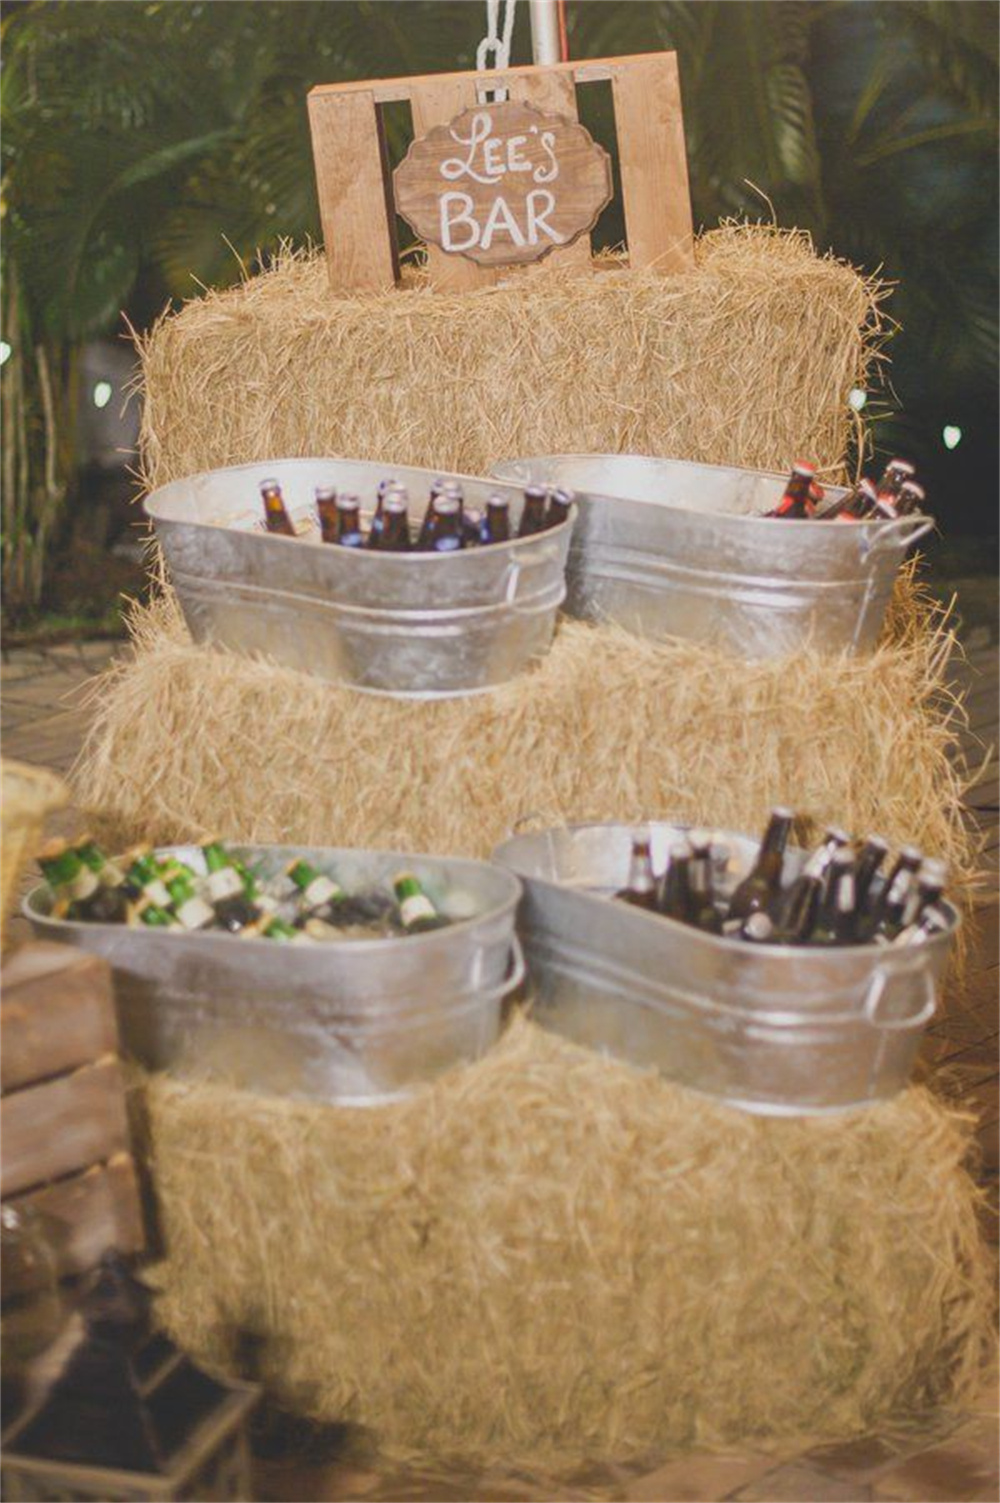 Fun Country Wedding Reception with Hay